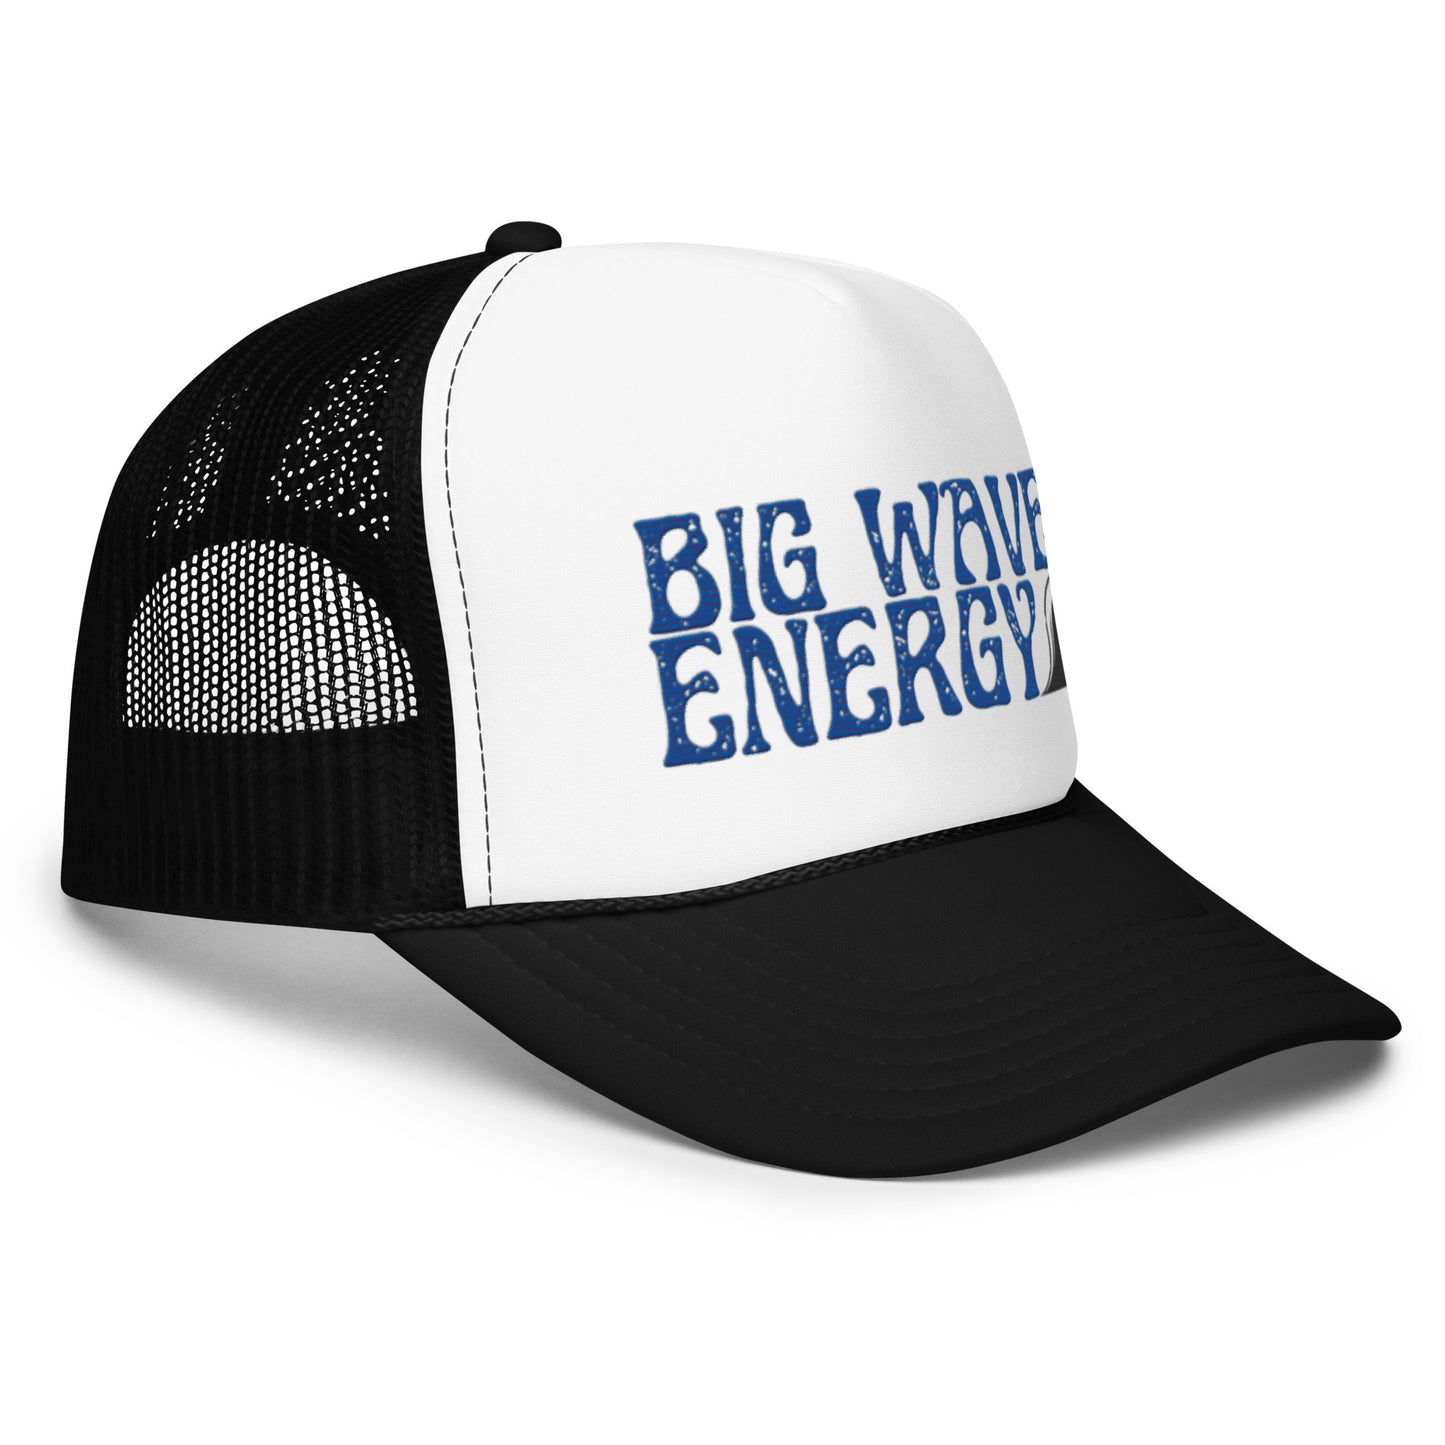 Big Wave Energy Foam Trucker Hat - Tropical Seas Clothing 